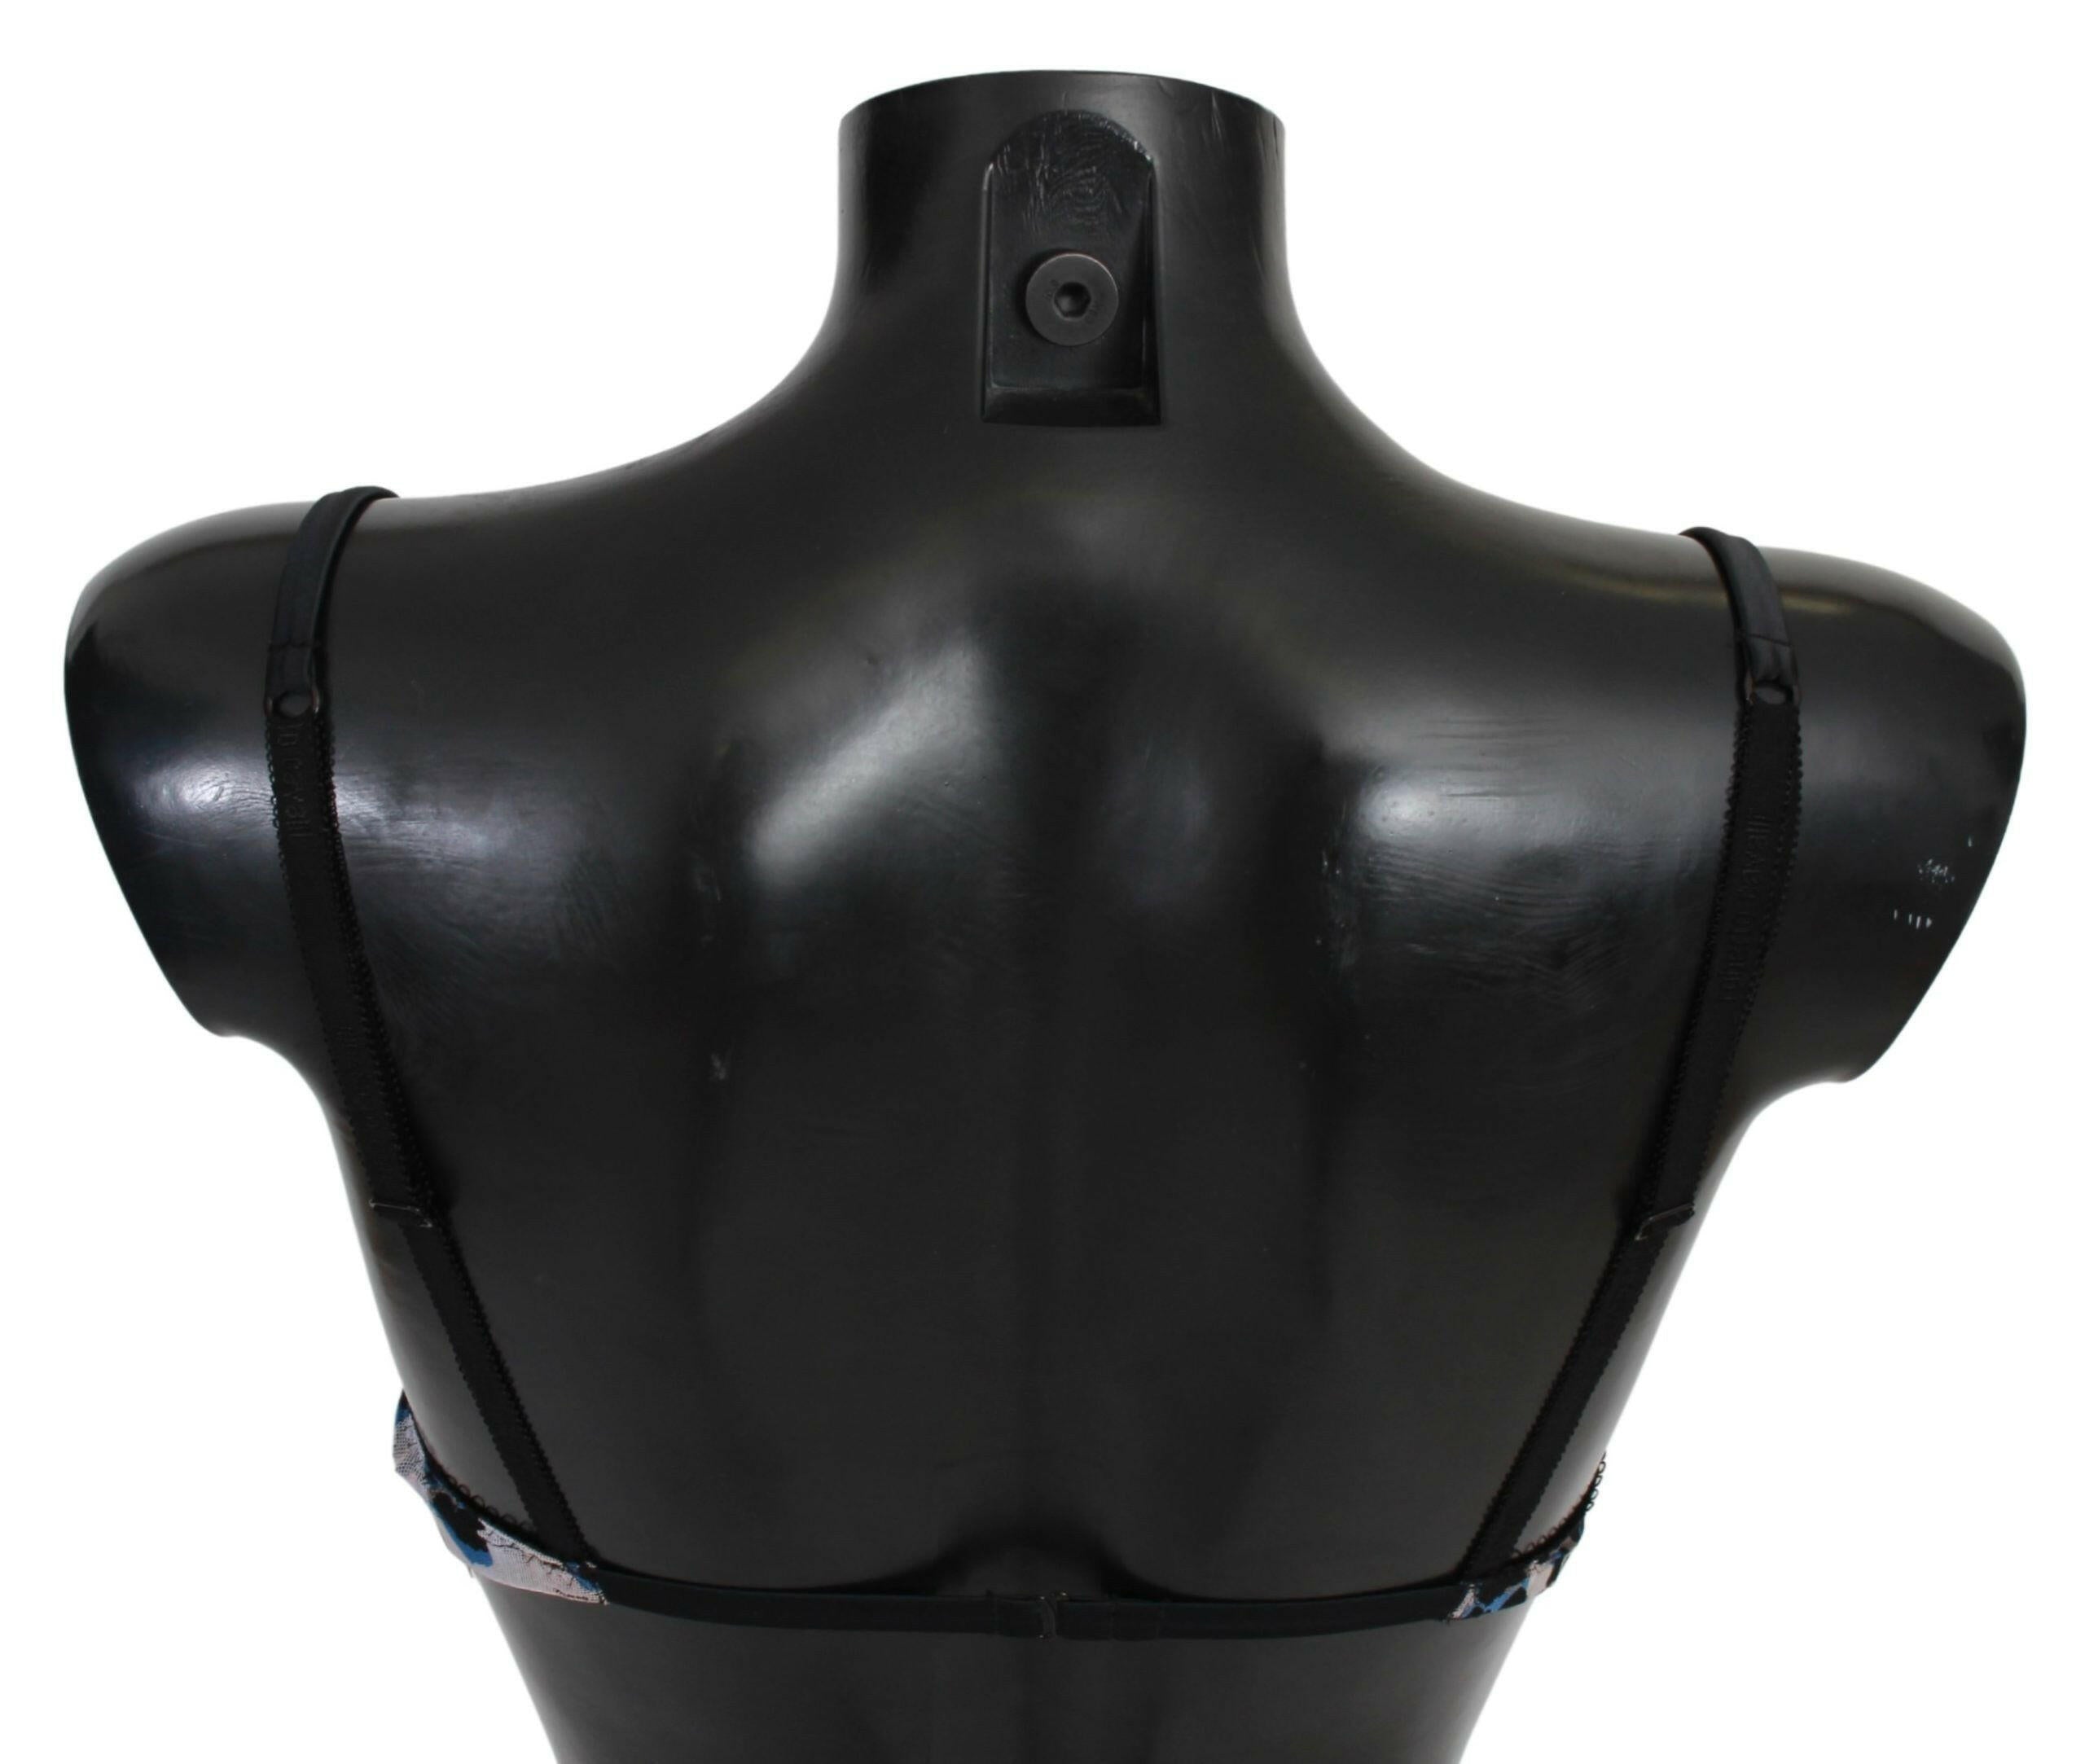 Roberto Cavalli Black Lace Reggiseno Nylon Bra Underwear - GENUINE AUTHENTIC BRAND LLC  